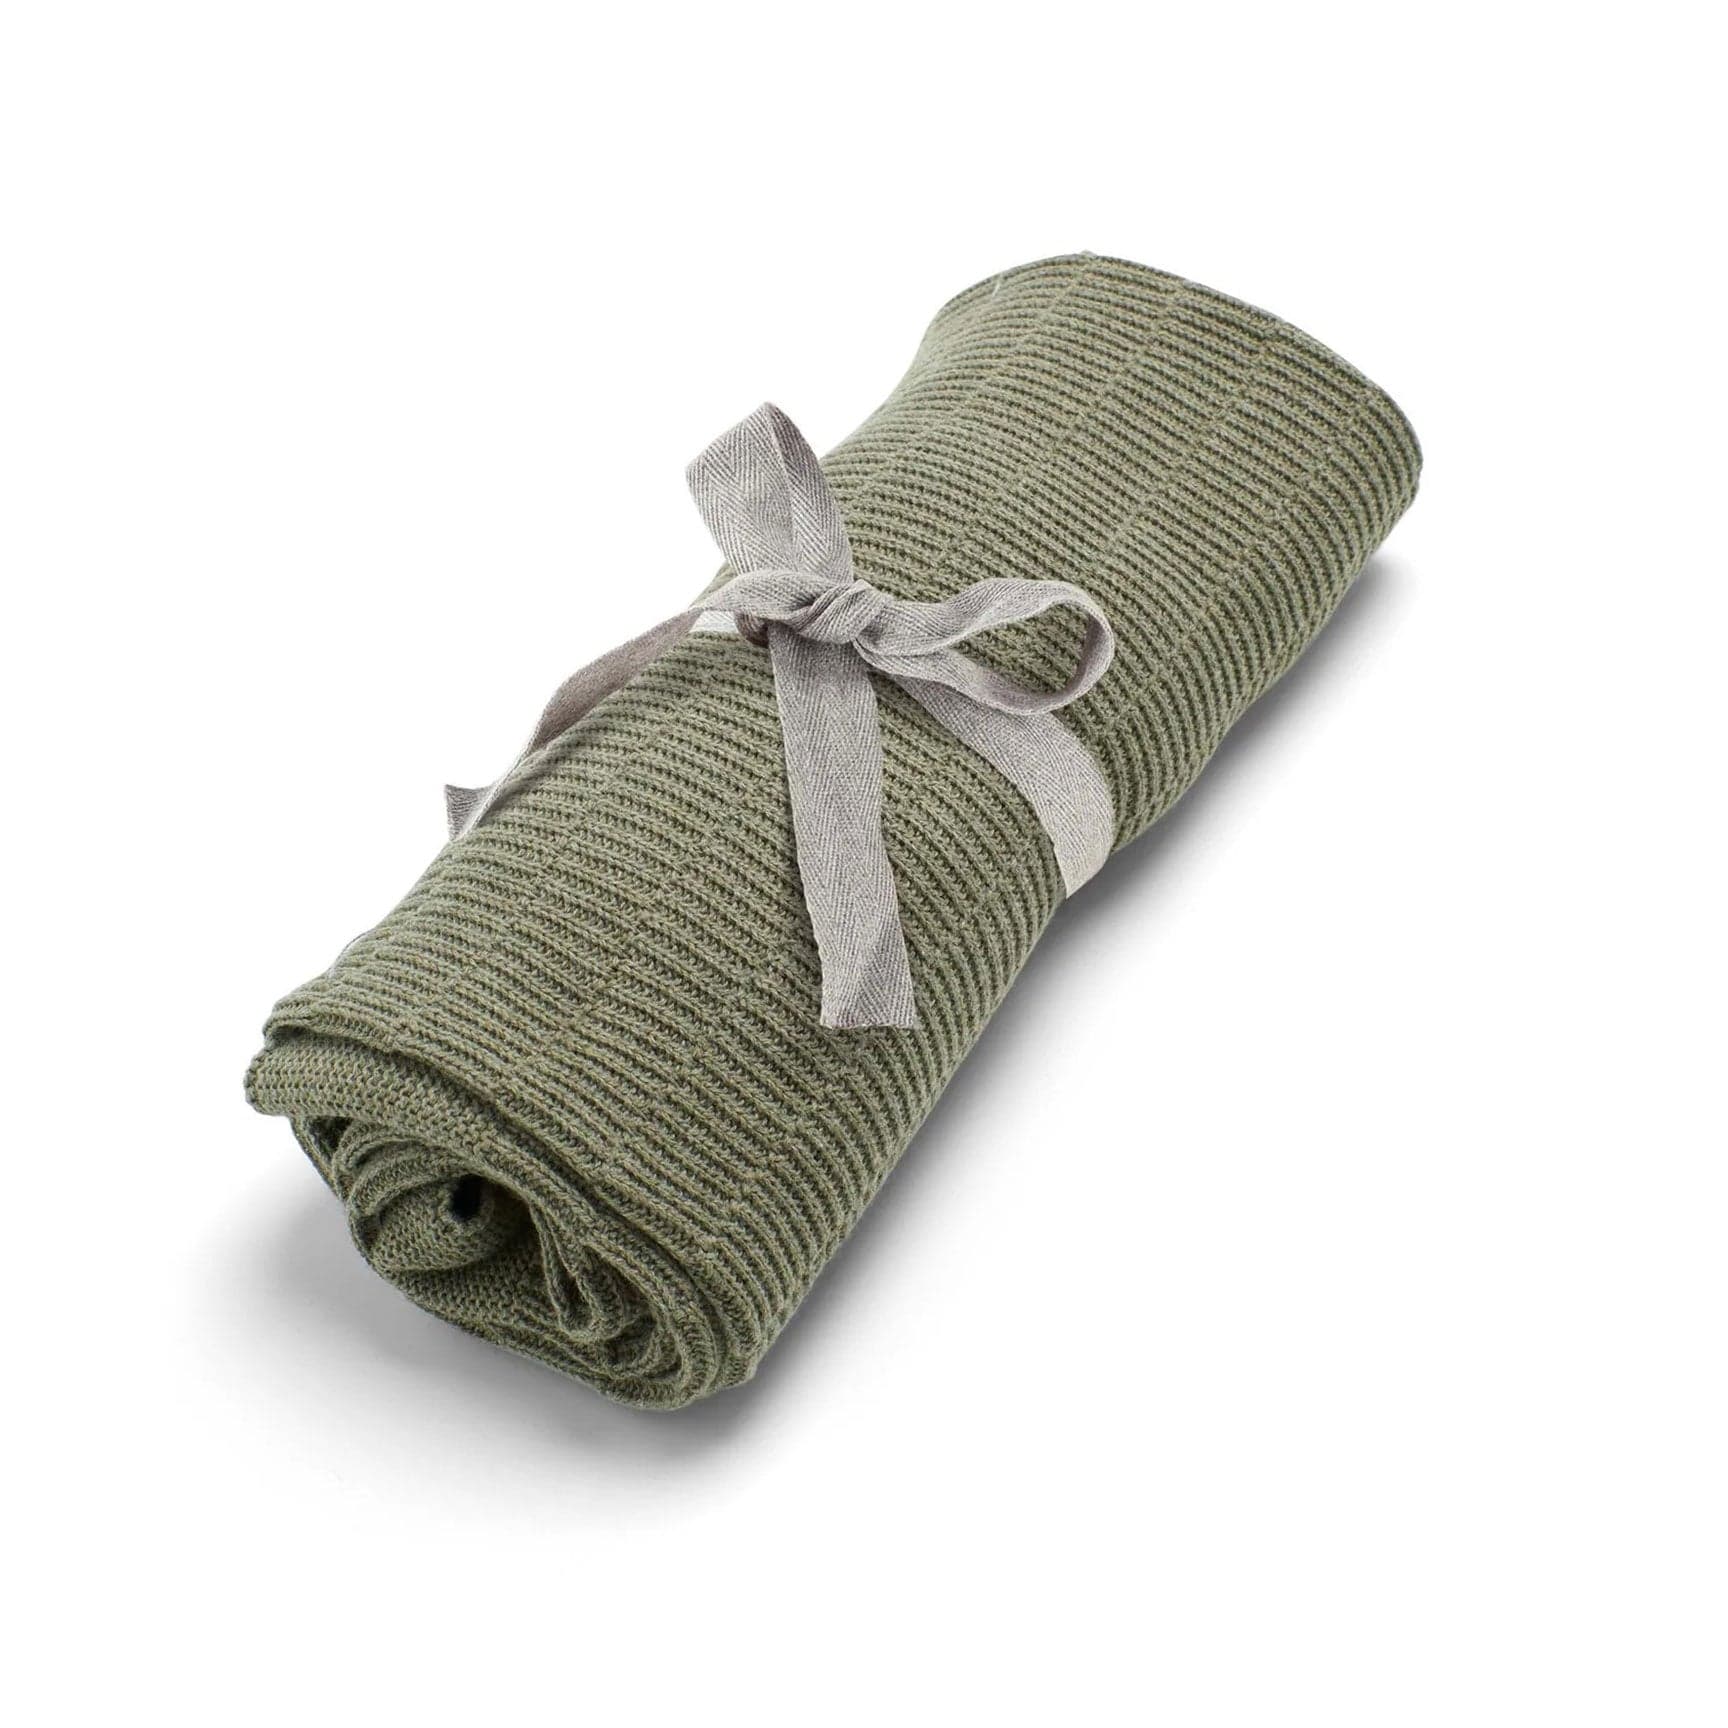 Mamas & Papas Knitted Blanket Small in Khaki Rib Cot & Cot Bed Blankets 7883JS701